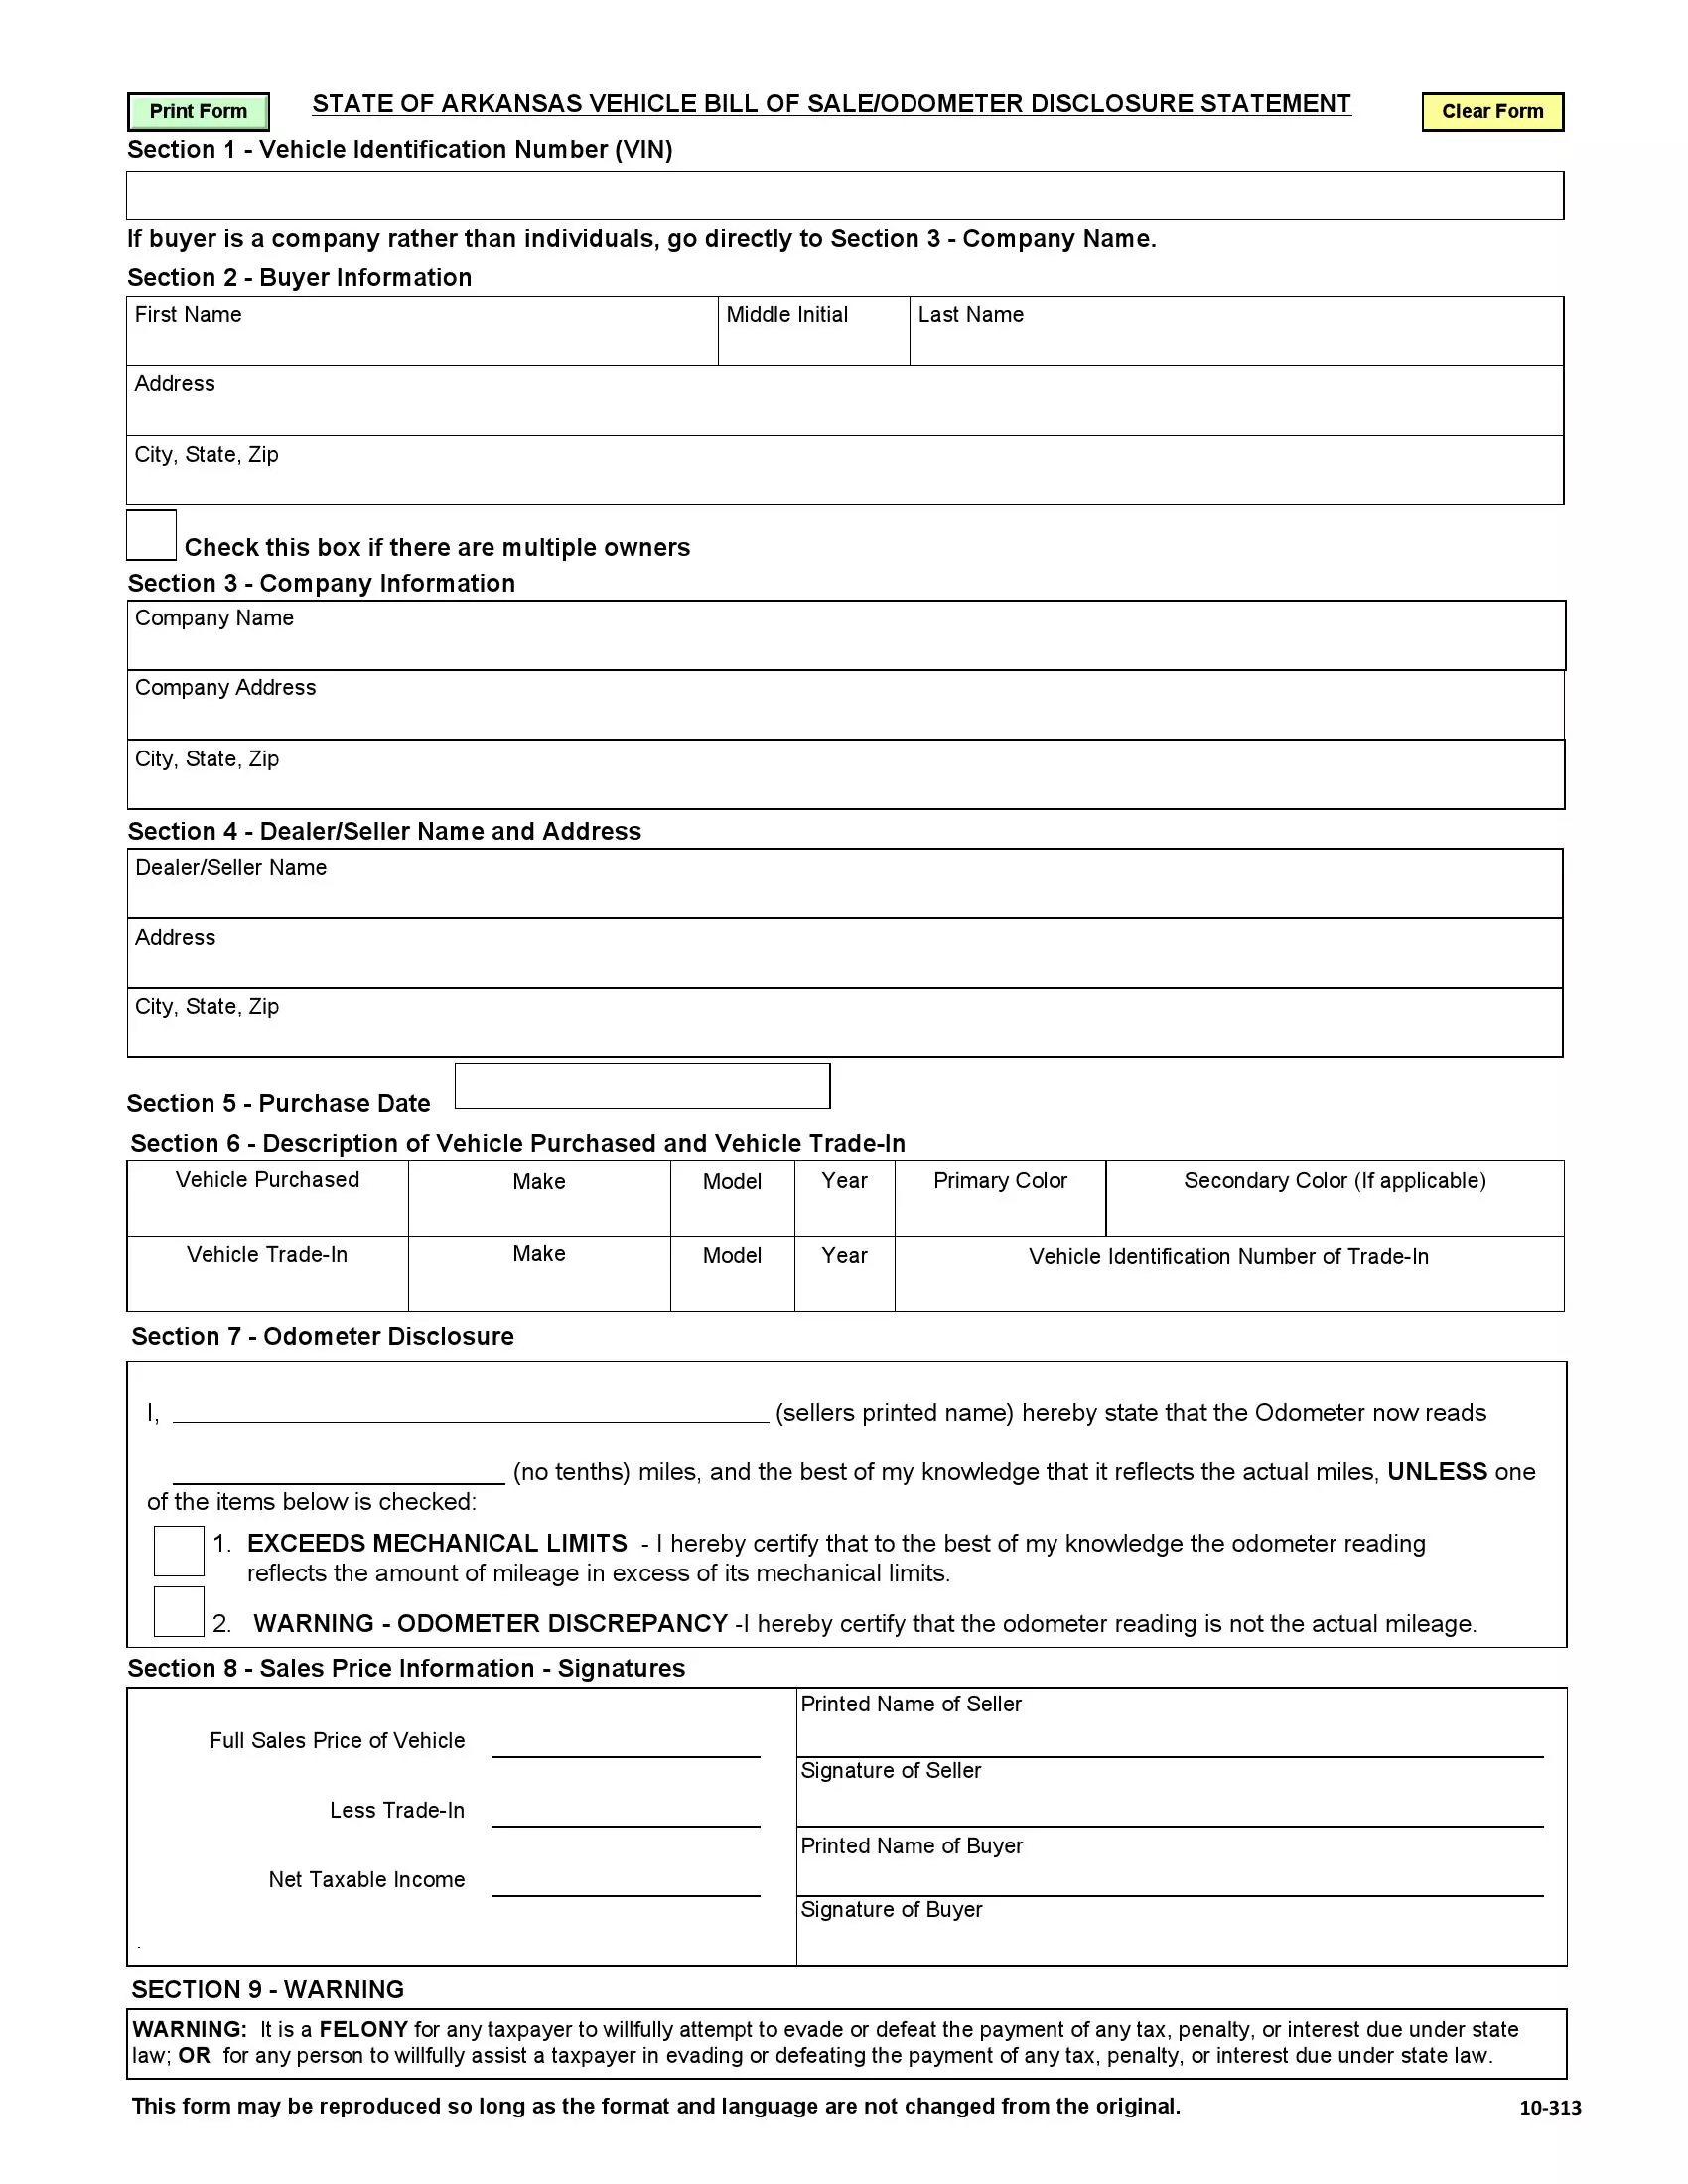 (Vehicle) Form 10-313